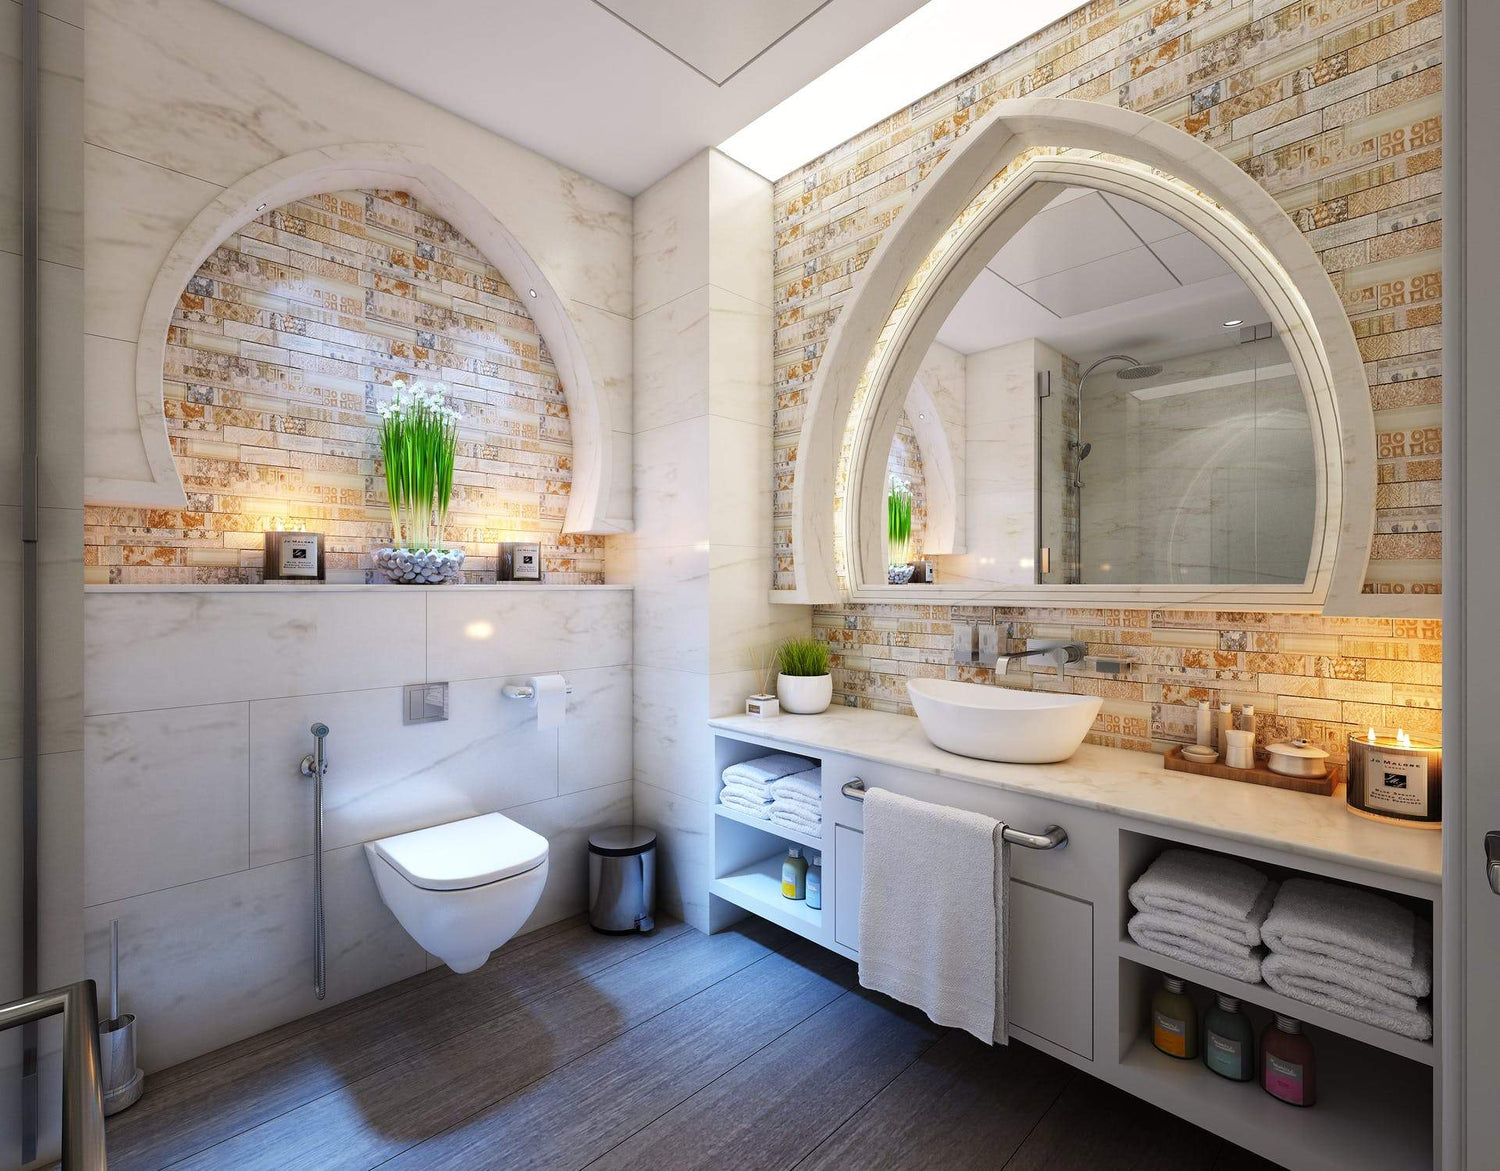 Top 10 Ideas for Flawless Bathroom